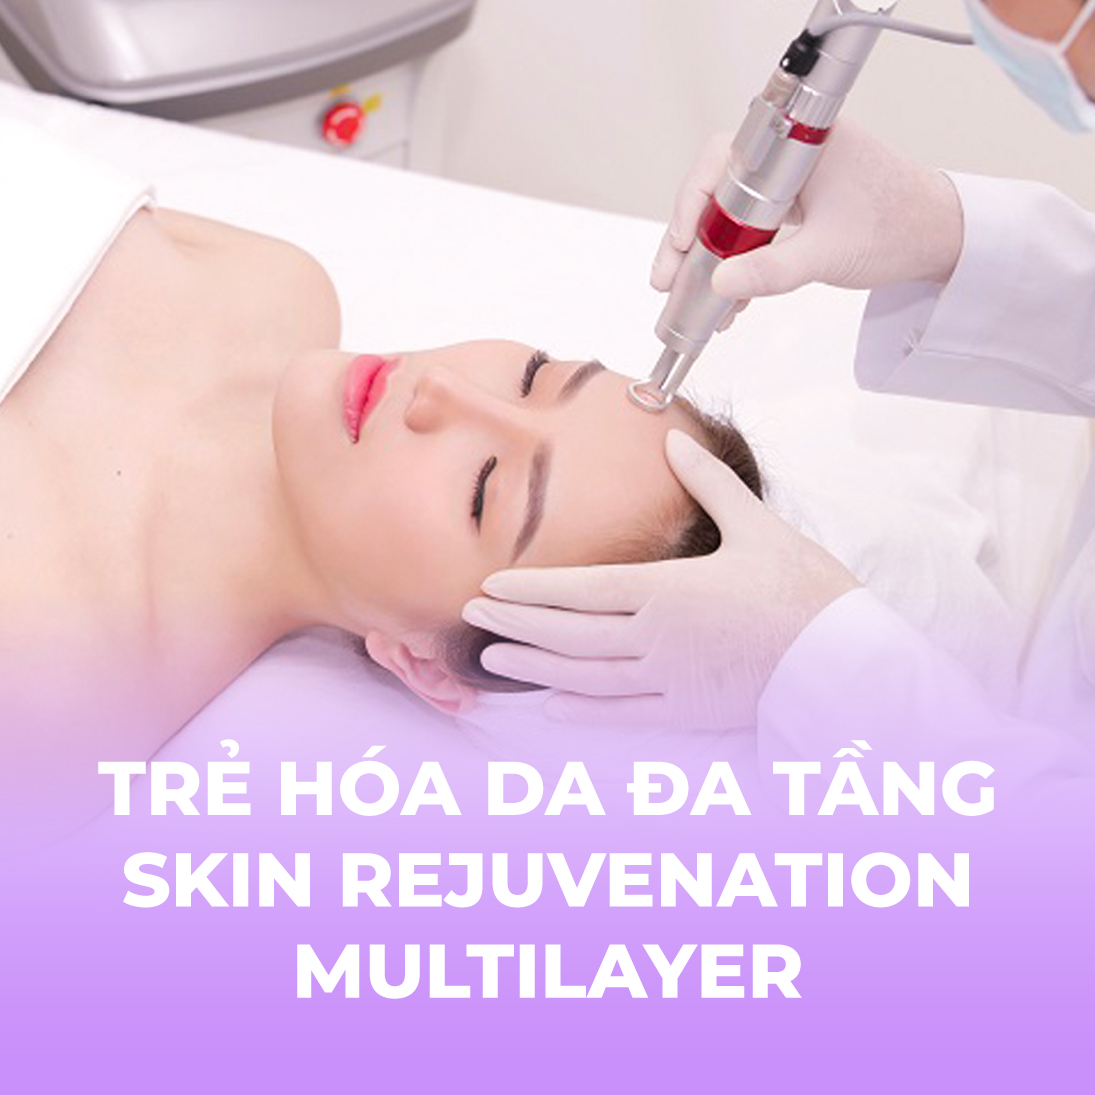 Trẻ hóa da đa tầng - Skin rejuvenation multilayer - 1 buổi